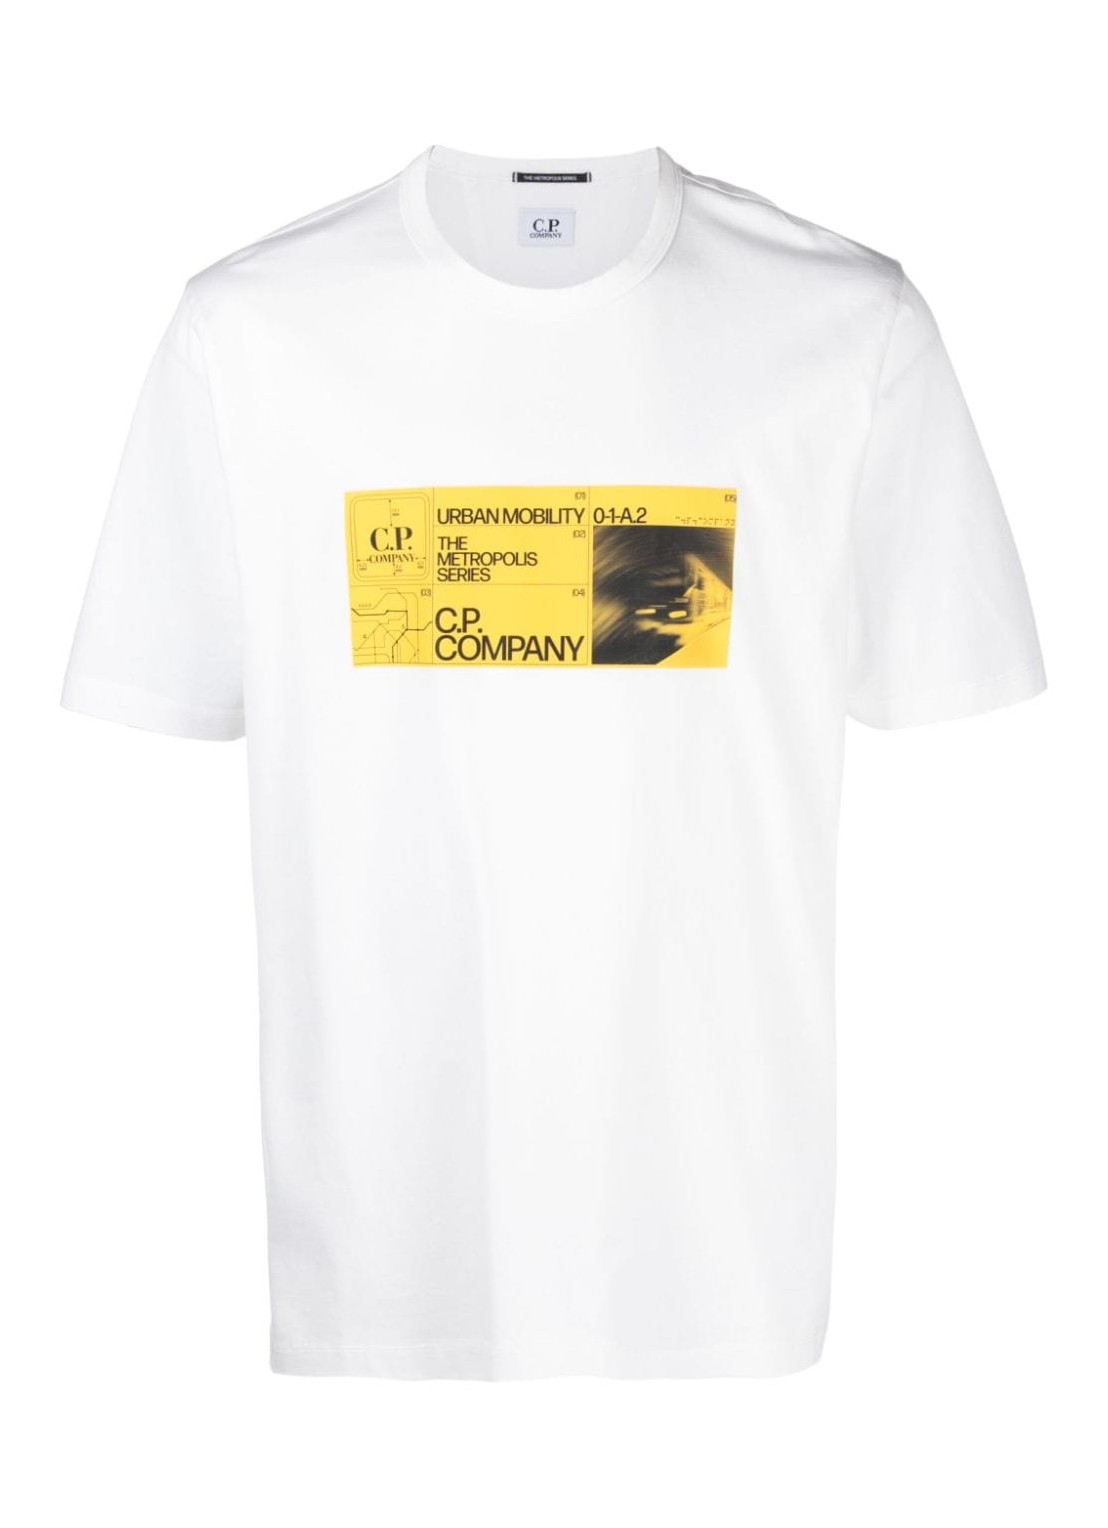 Camiseta c.p.company t-shirt man metropolis series mercerized jersey urban mobility t-shirt 16clts04